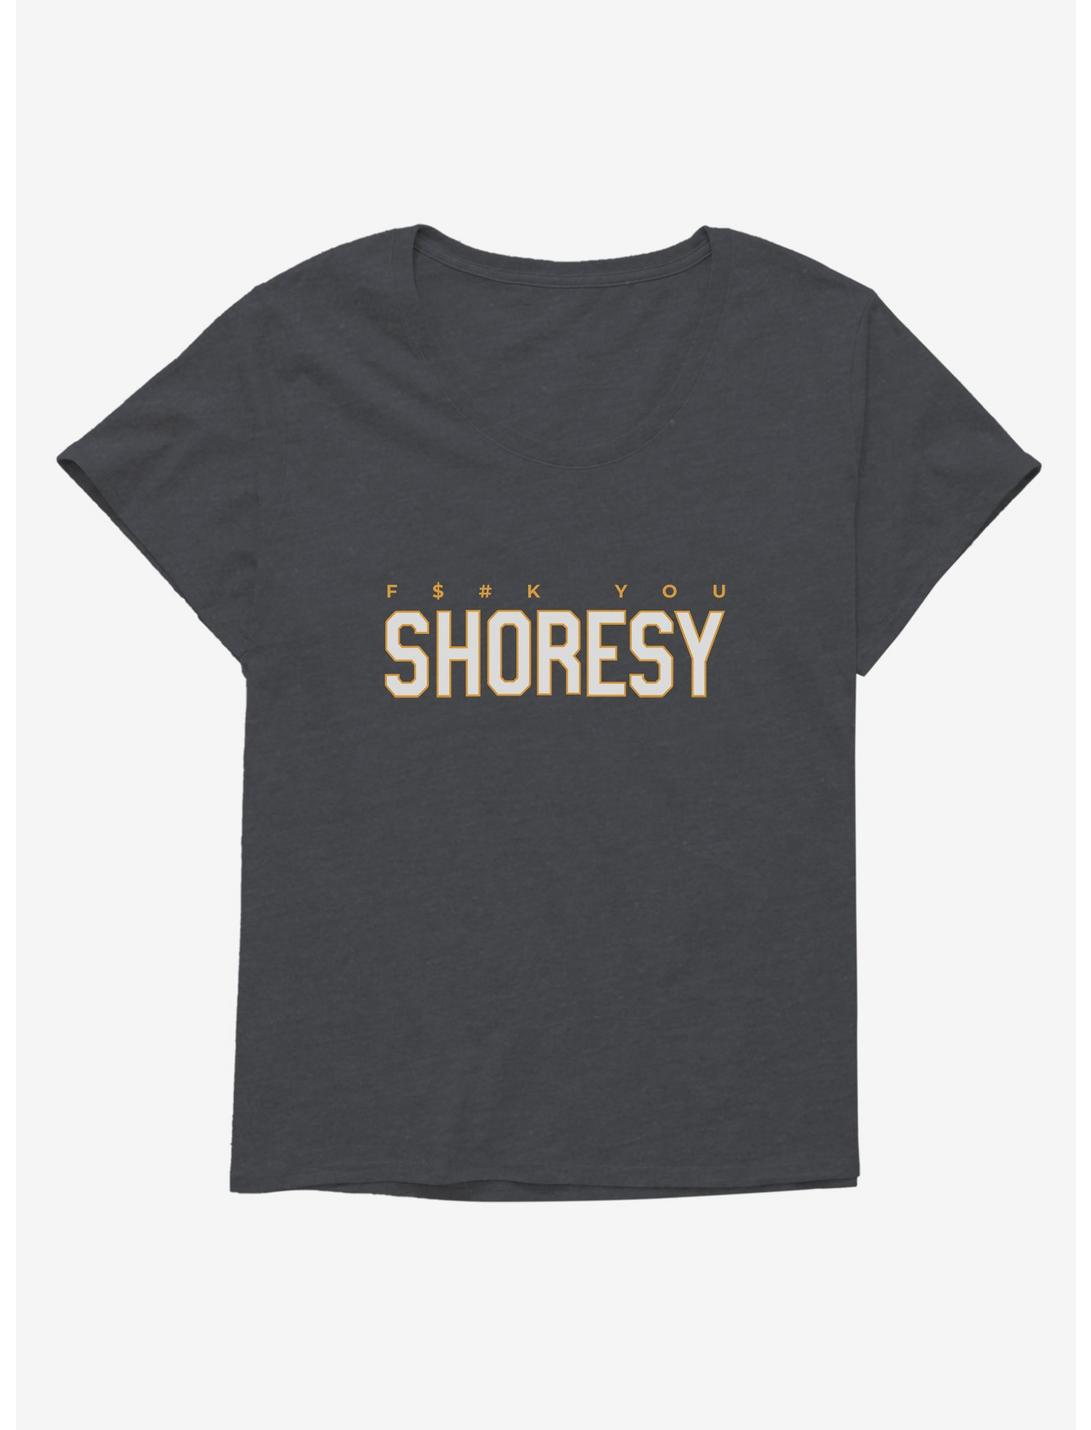 Shoresy F You Shoresy Girls T-Shirt Plus Size, CHARCOAL HEATHER, hi-res